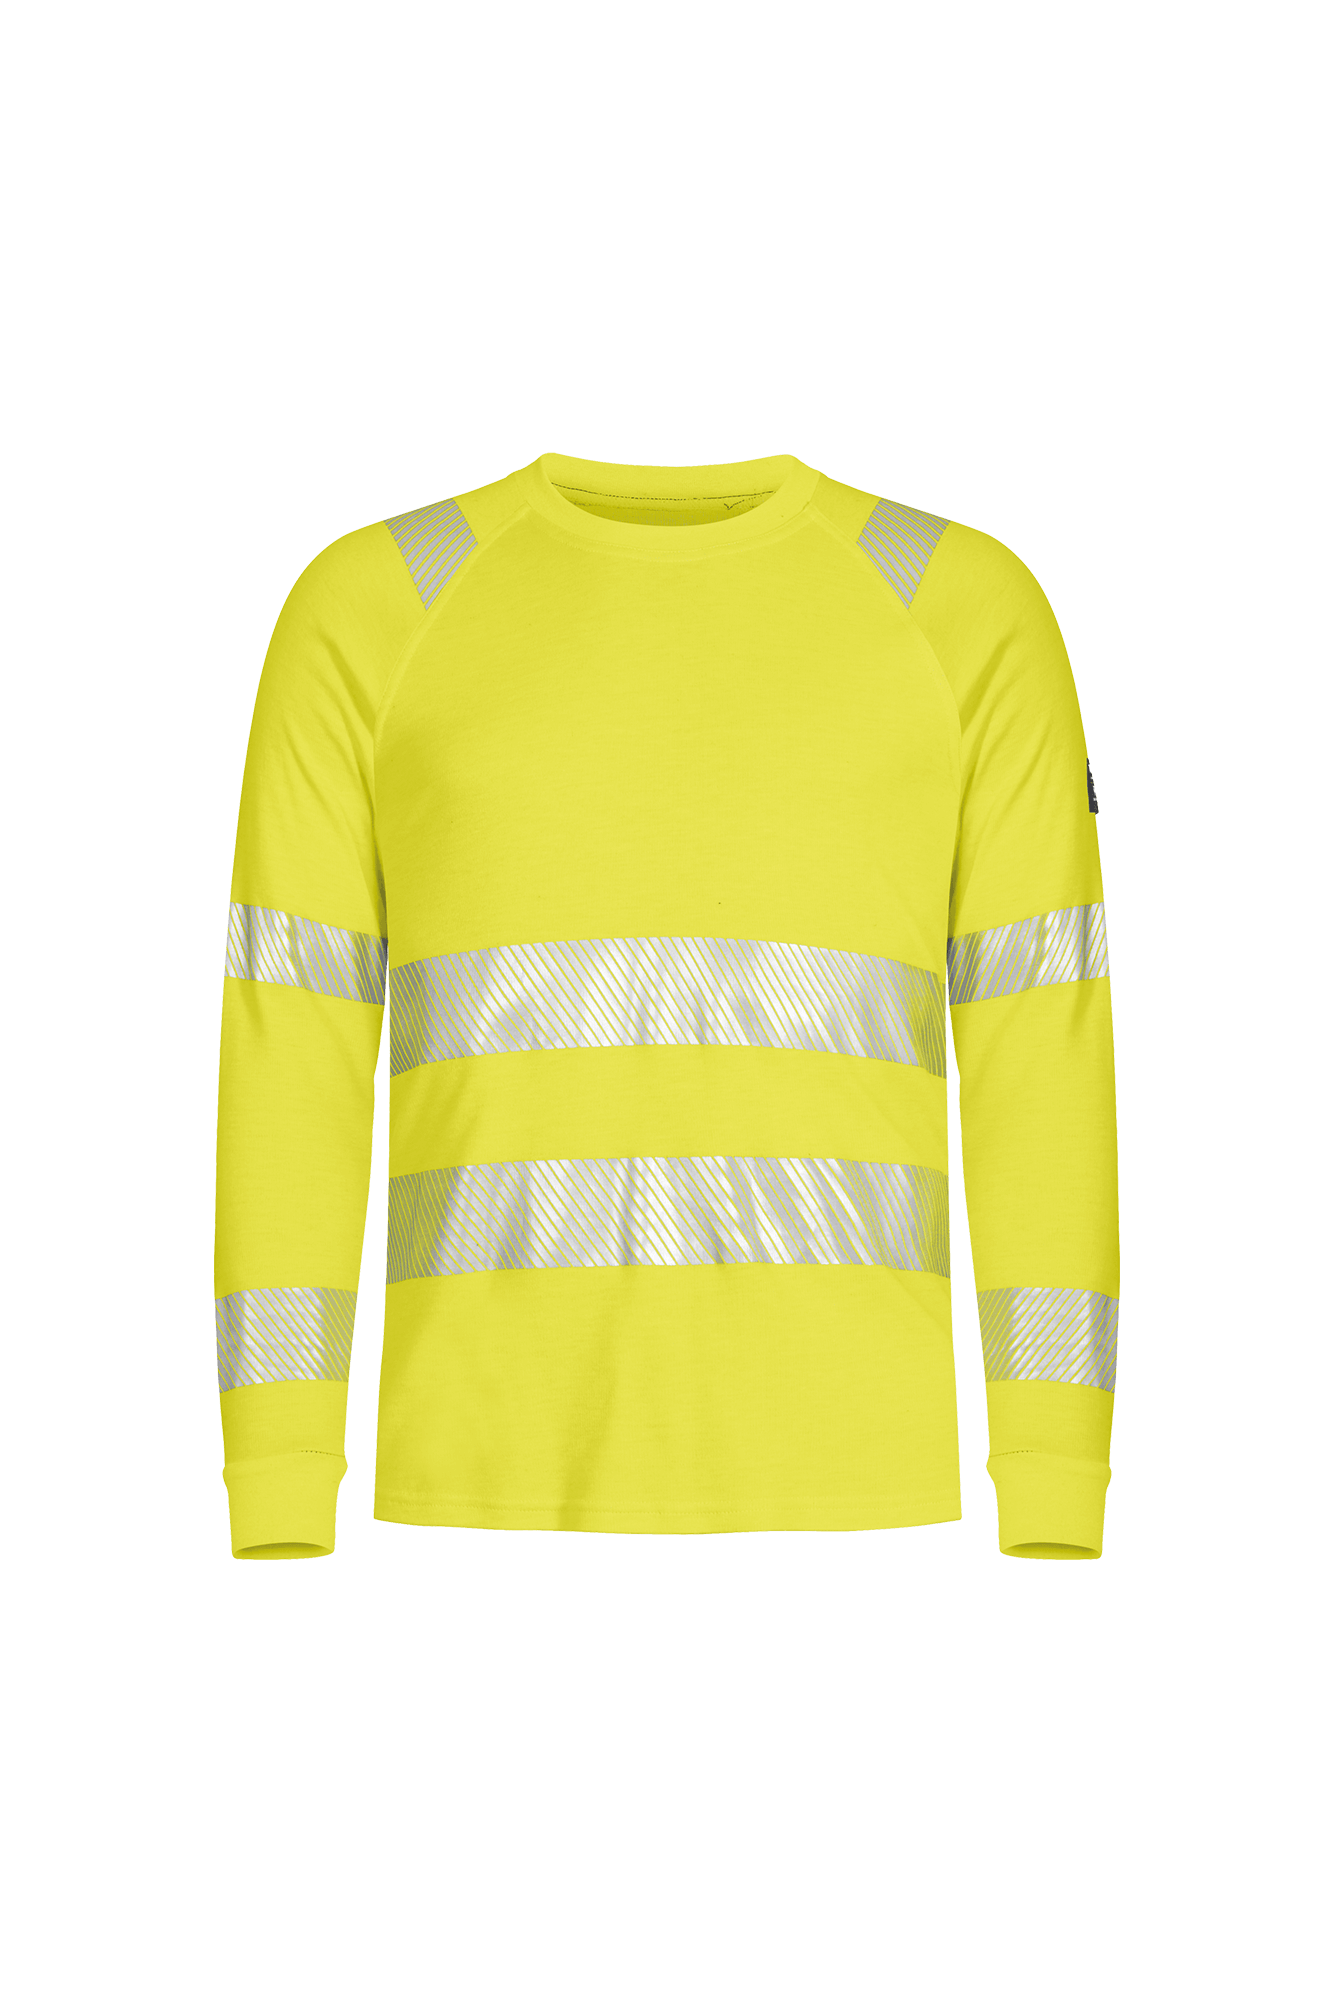 flammehæmmende t-shirt, Hi-vis gul klasse 3, 508486, front